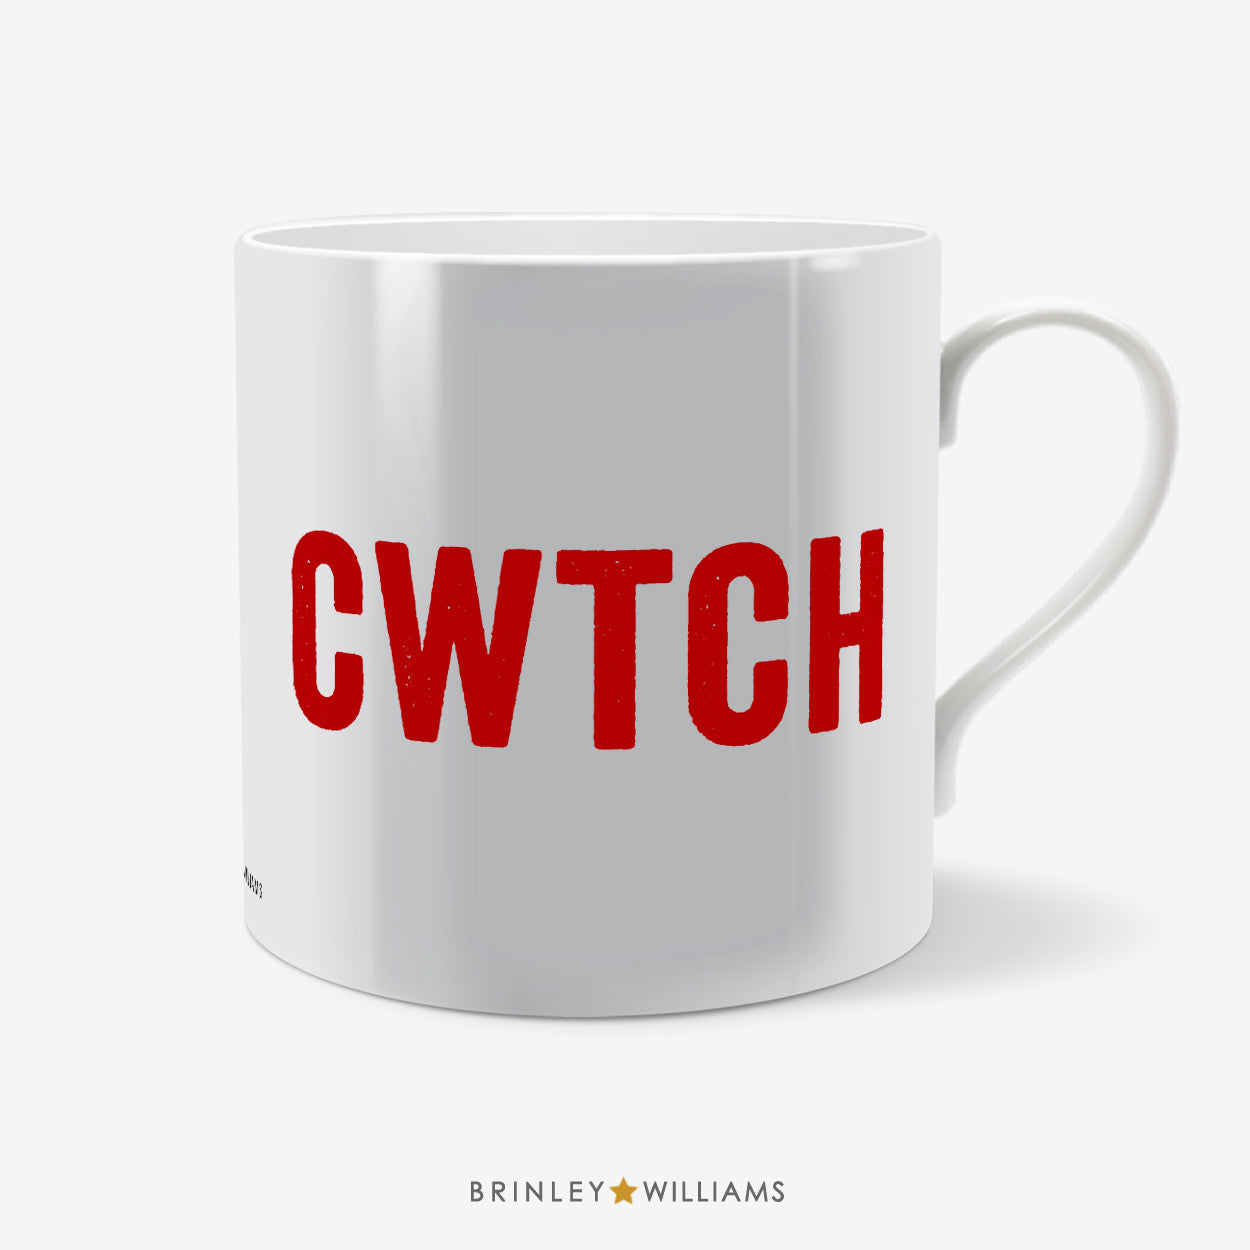 Cwtch Welsh Mug - Red